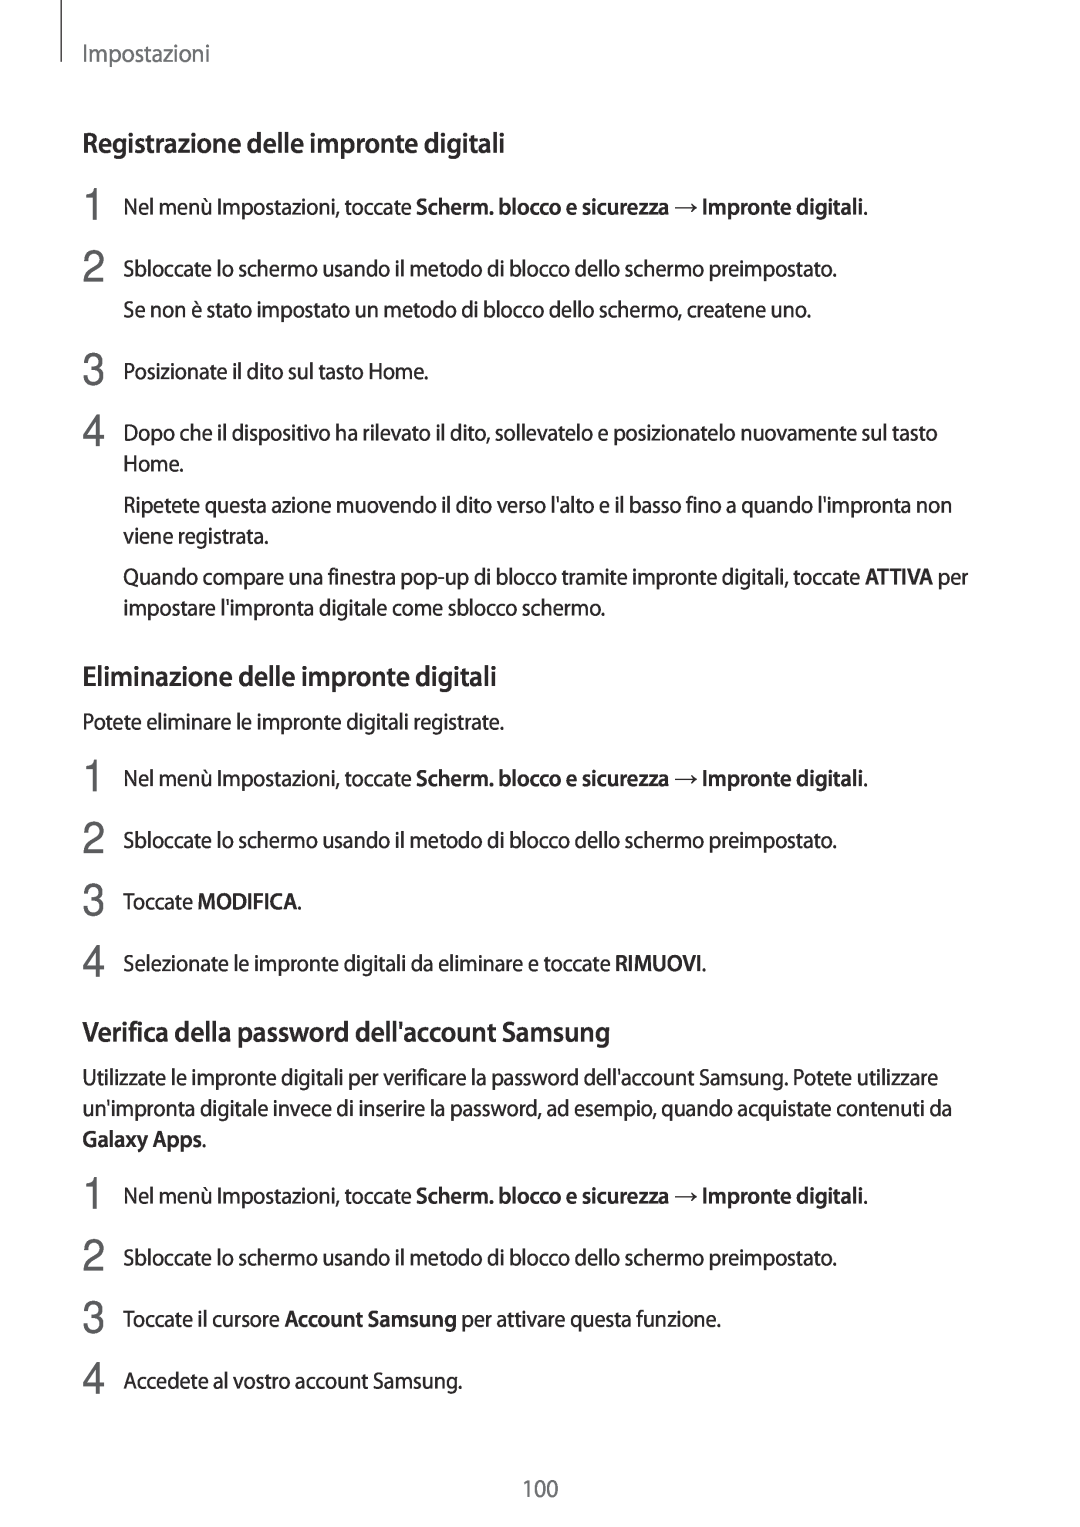 Samsung SM-T810NZWEPHN manual Registrazione delle impronte digitali, Eliminazione delle impronte digitali, Impostazioni 